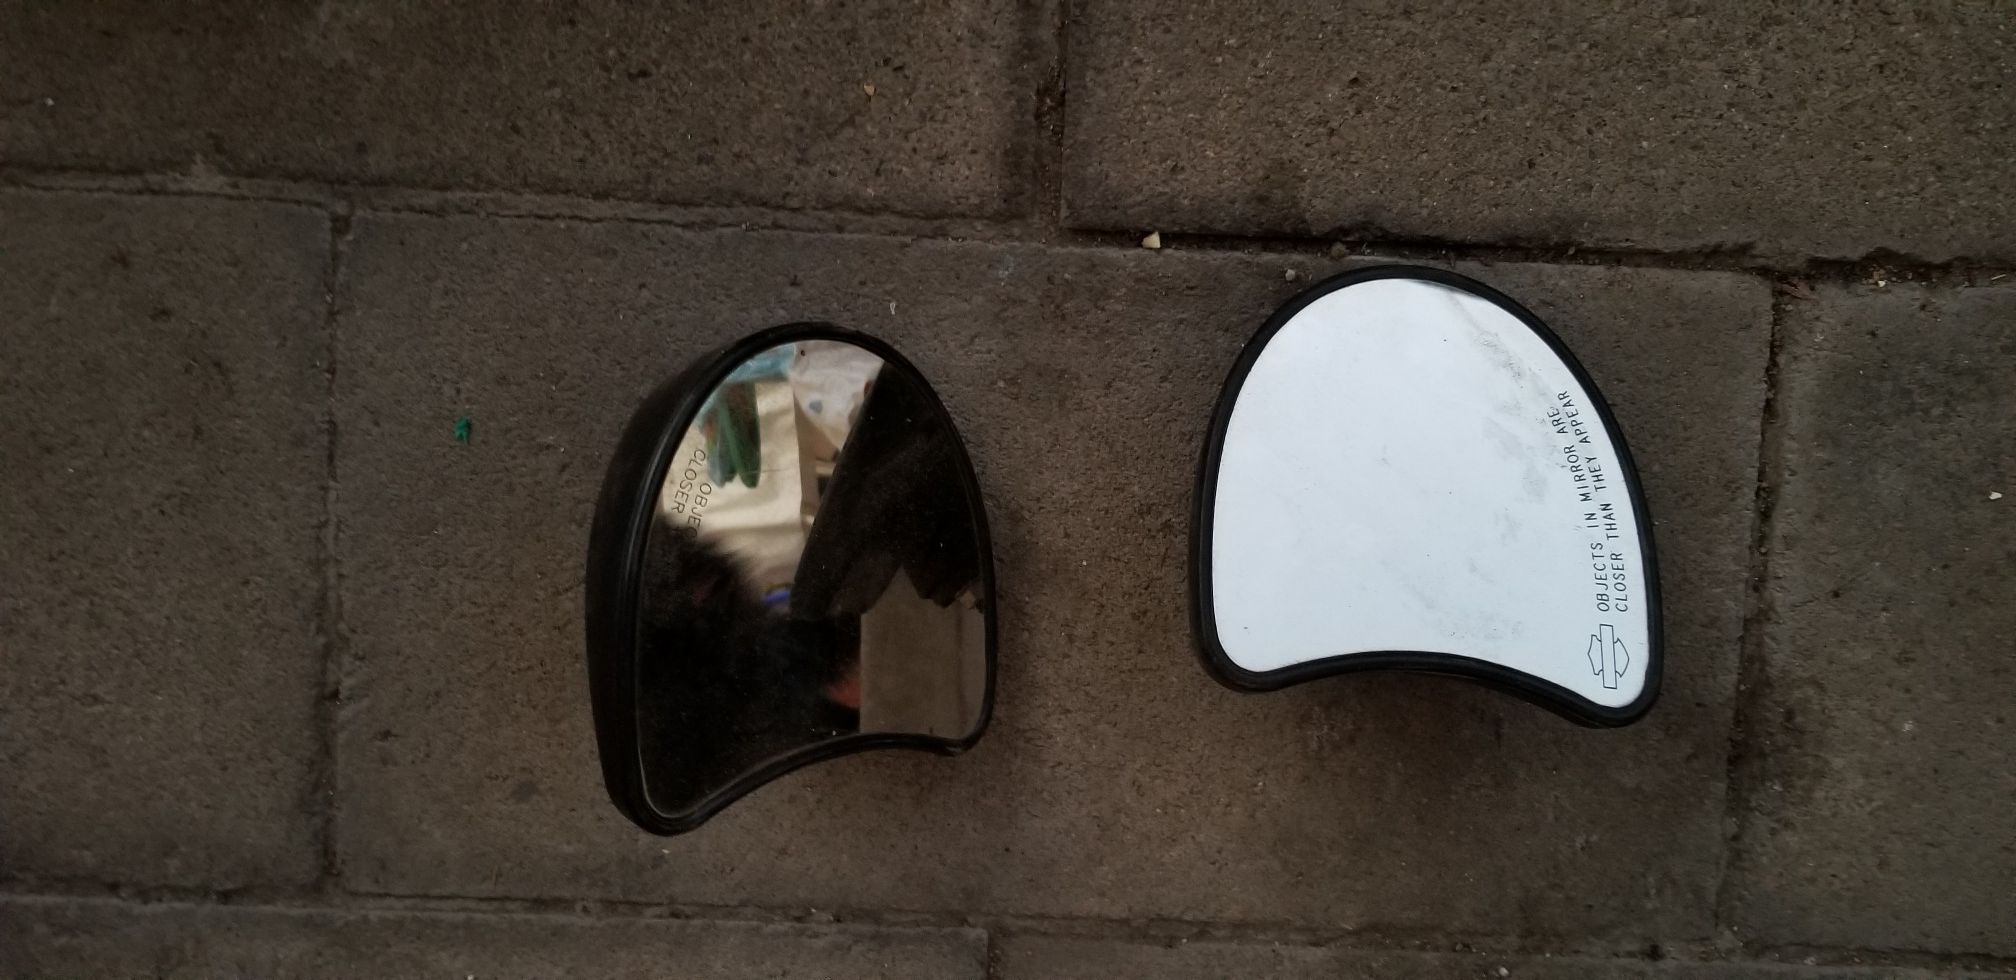 Harley Davidson mirrors